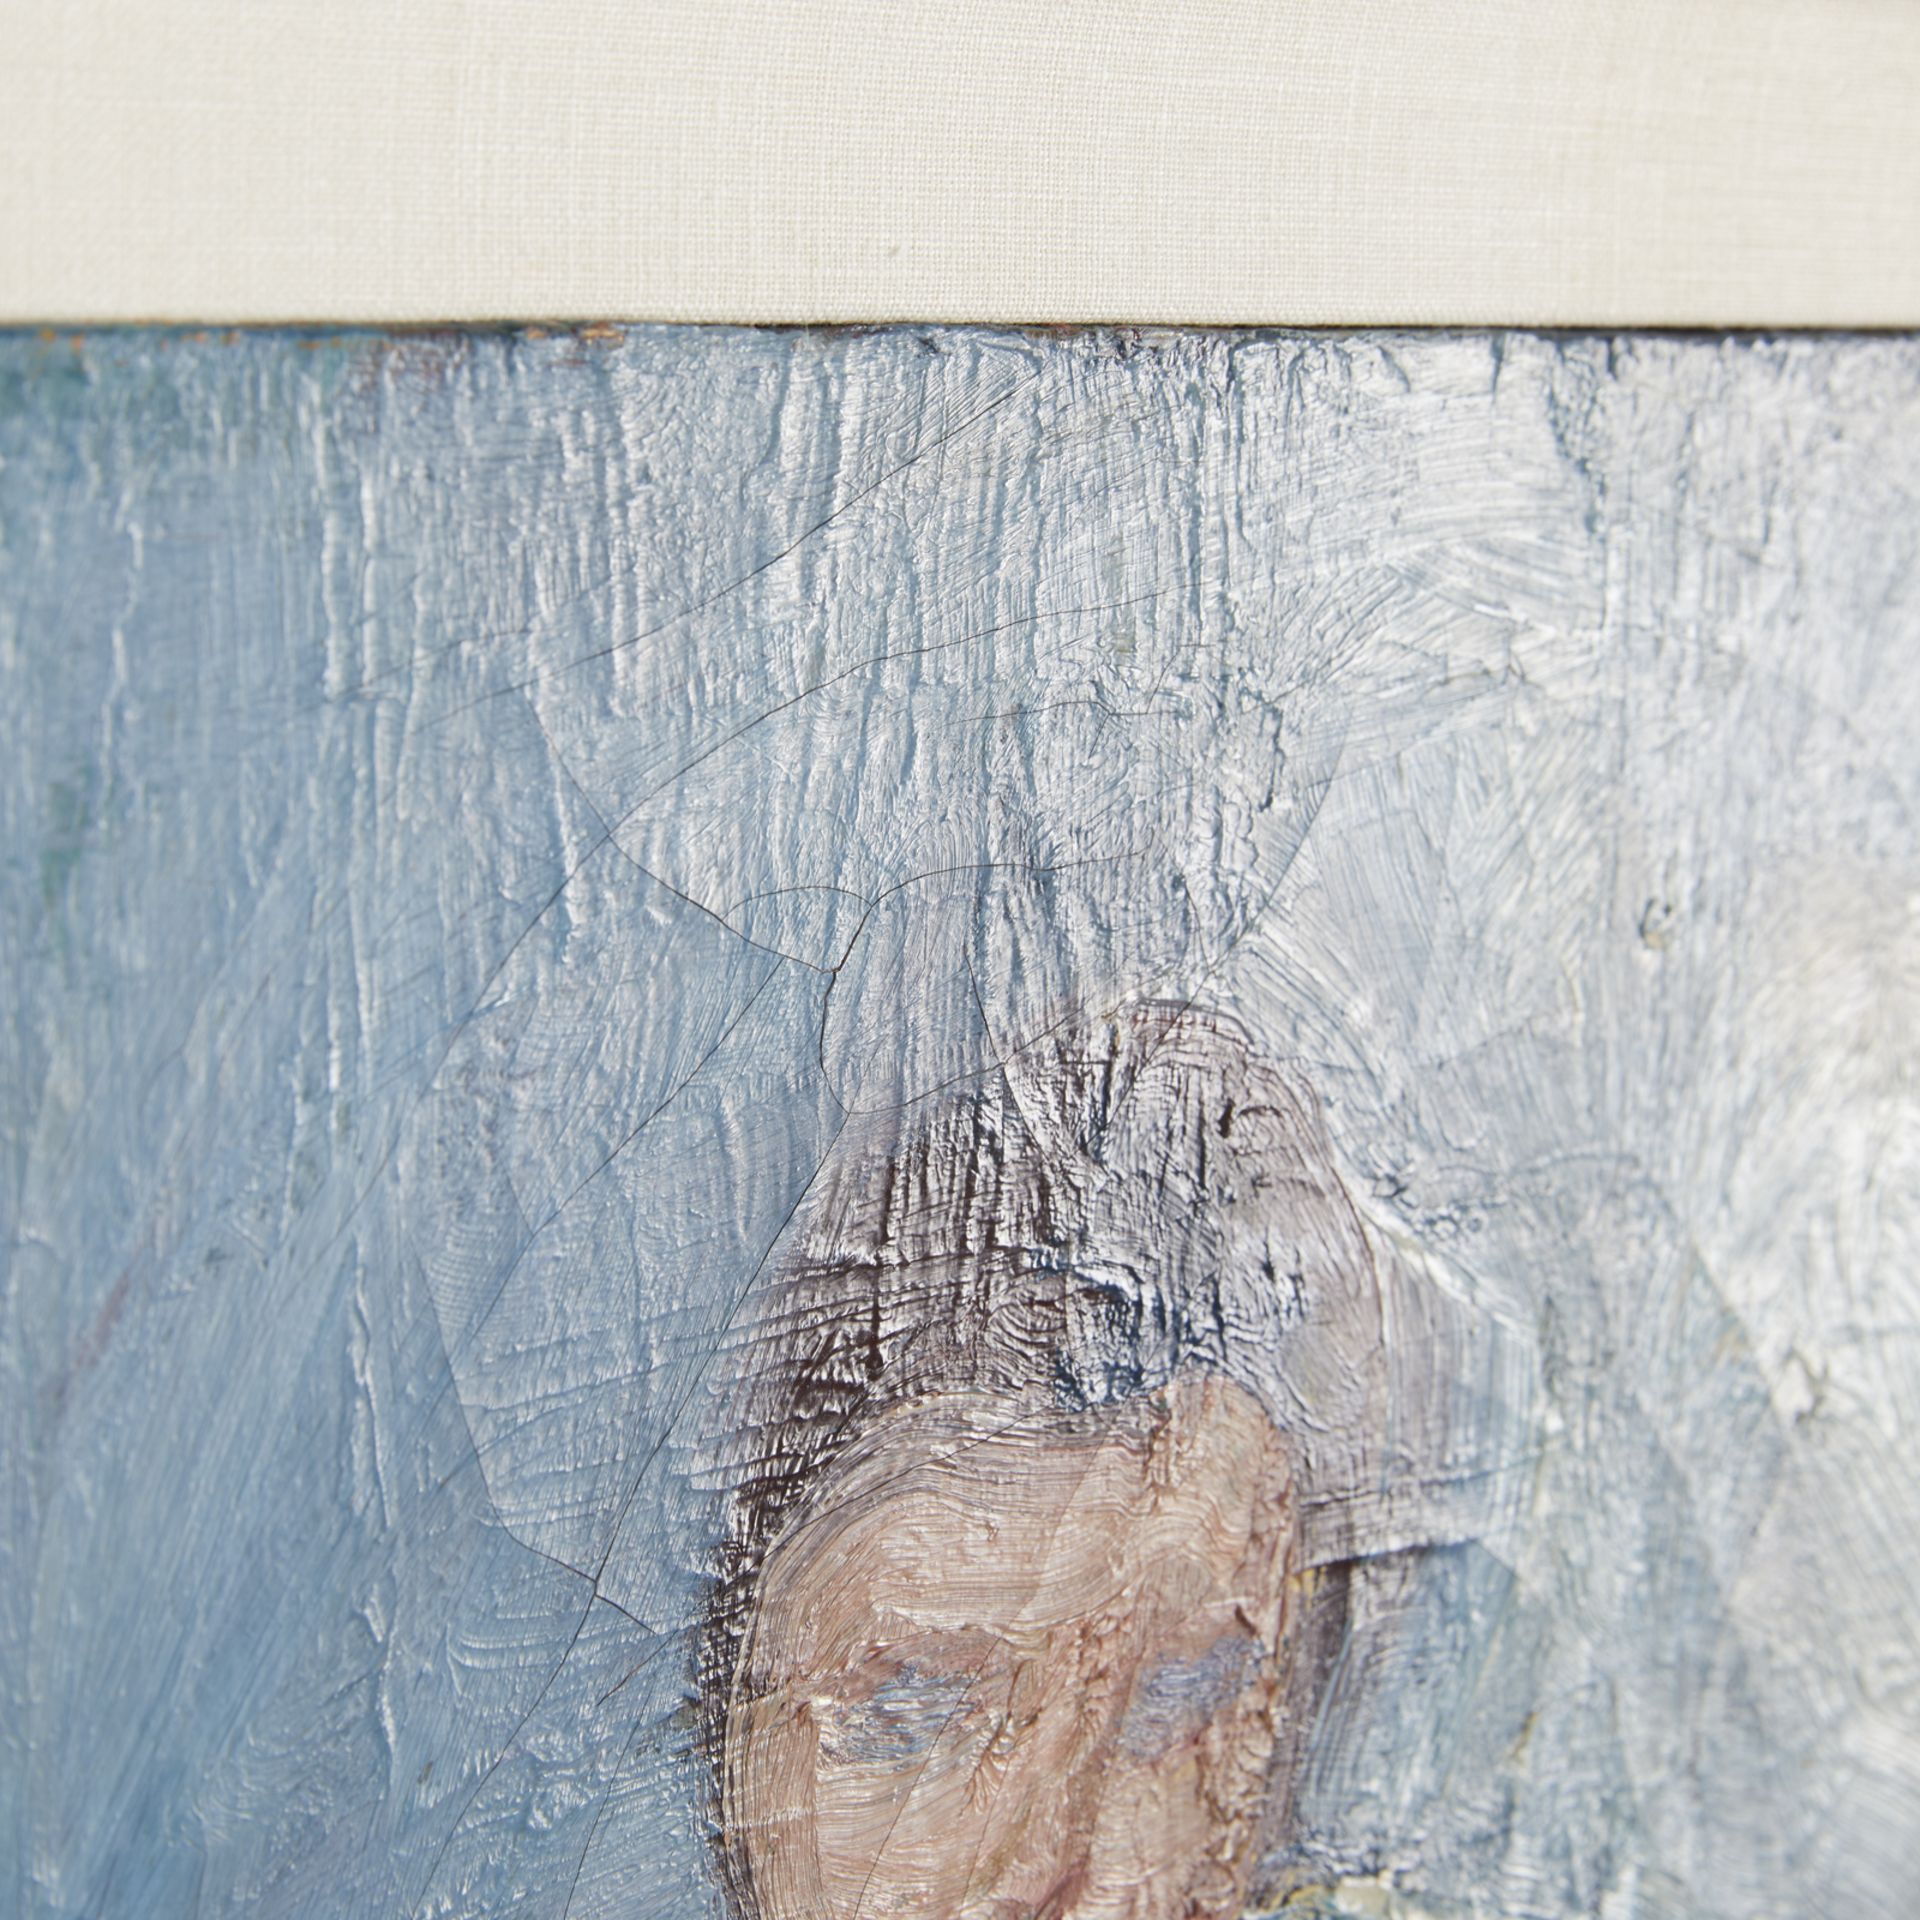 Richard Diebenkorn "Reclining Nude II" Painting - Image 6 of 13